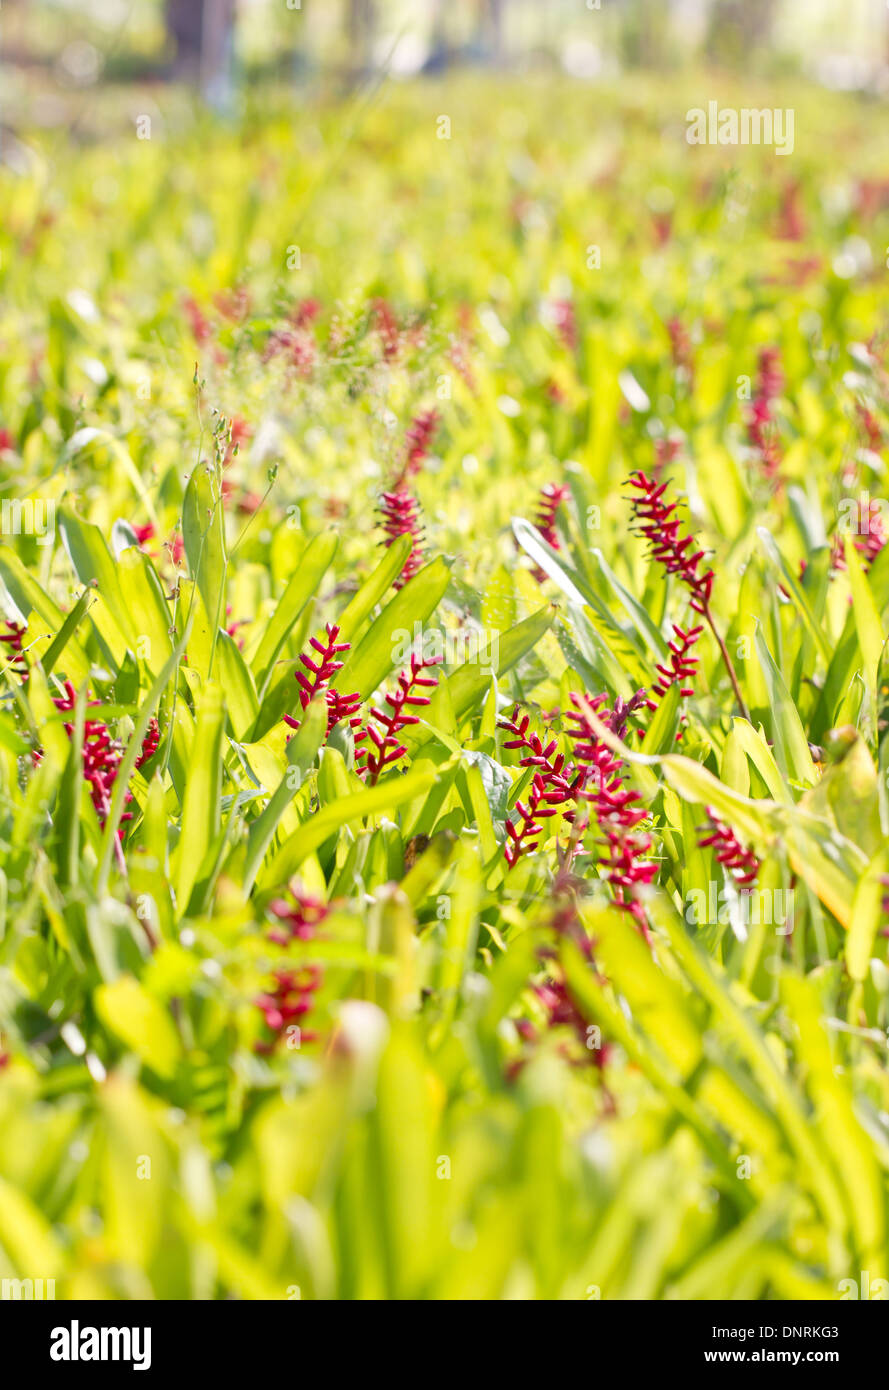 Red aechmea apocalyptica gamesopela bromeliad flowers. Stock Photo